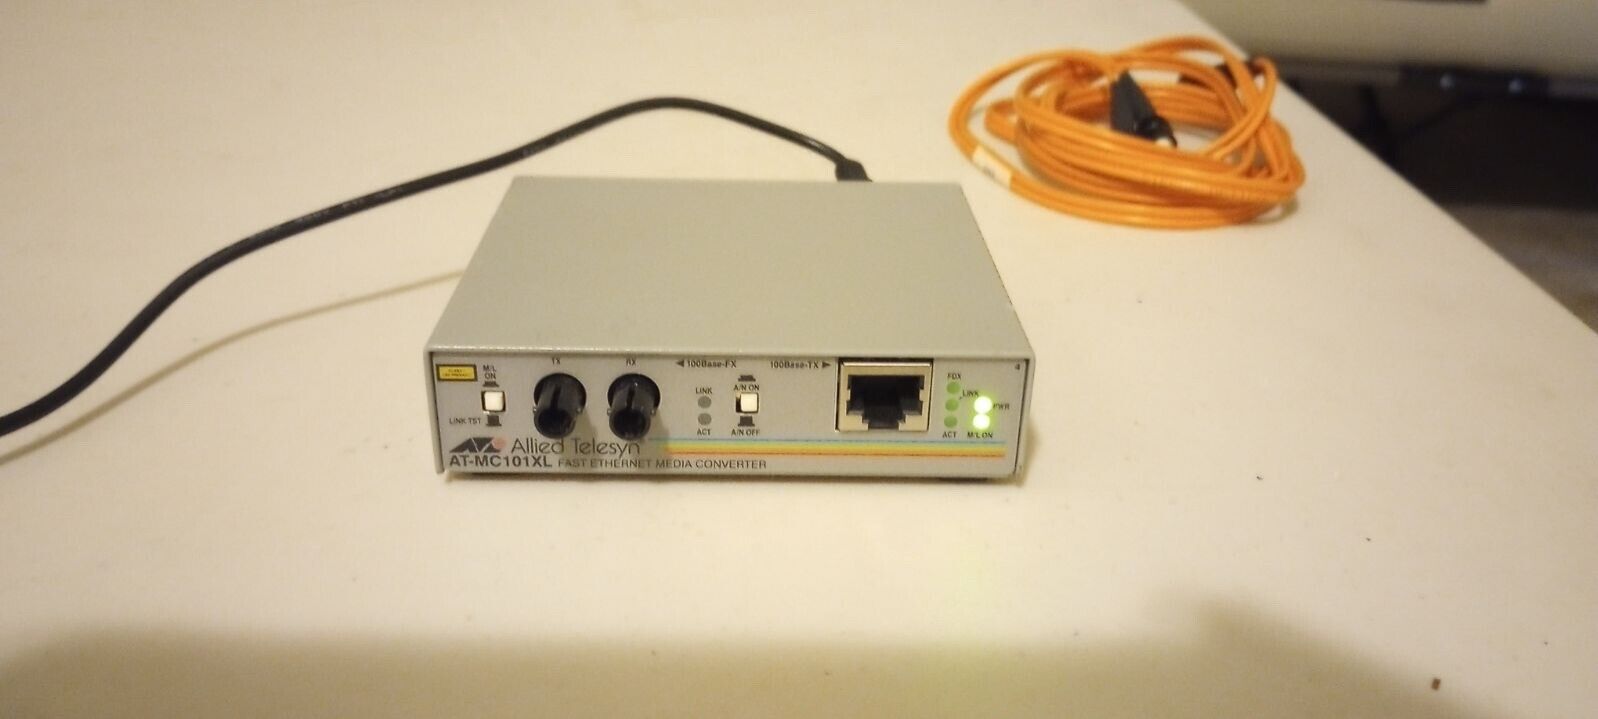 Allied Telesyn International AT-MC101XL Fast Ethernet Media Converter (3 pieces)